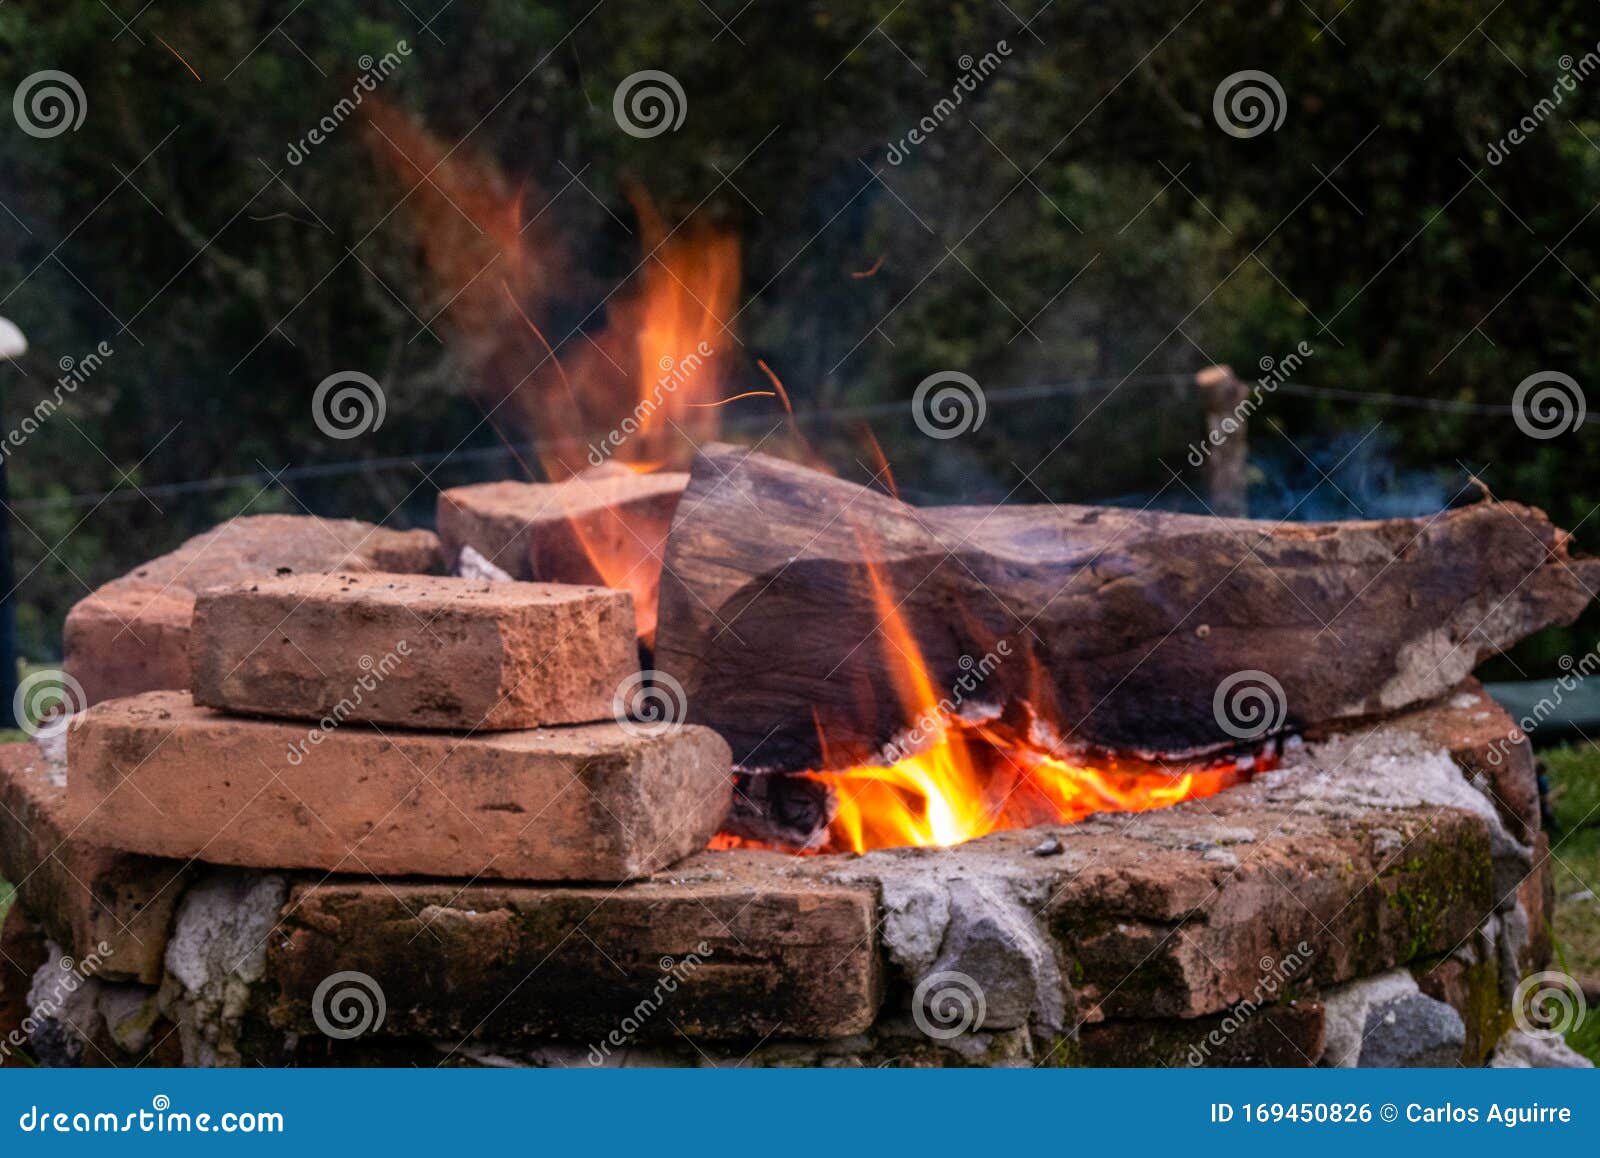 wood burning in campfire on bricks 4